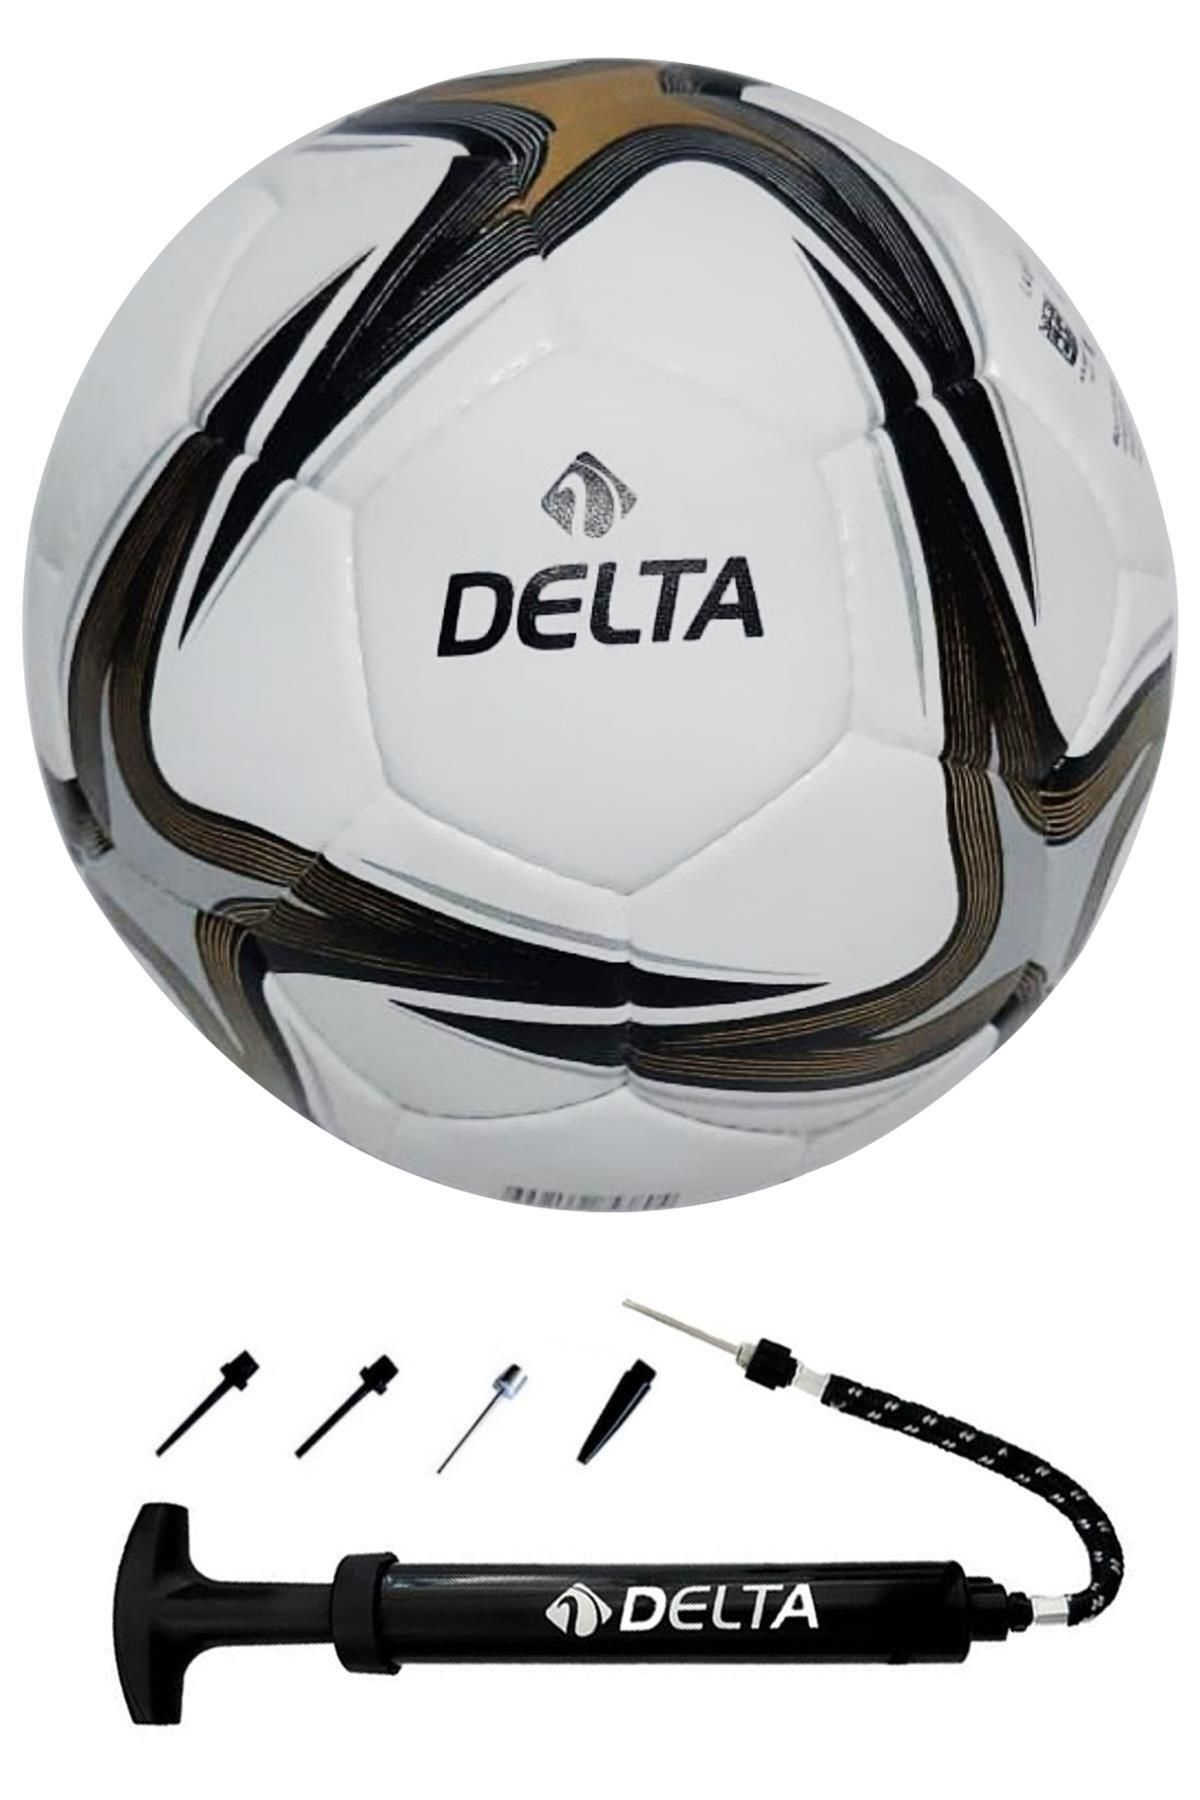 Delta Super League El Dikişli 4 Numara Dura-Strong Futbol Topu + Çok Fonksiyonlu Top Pompası İkili Set